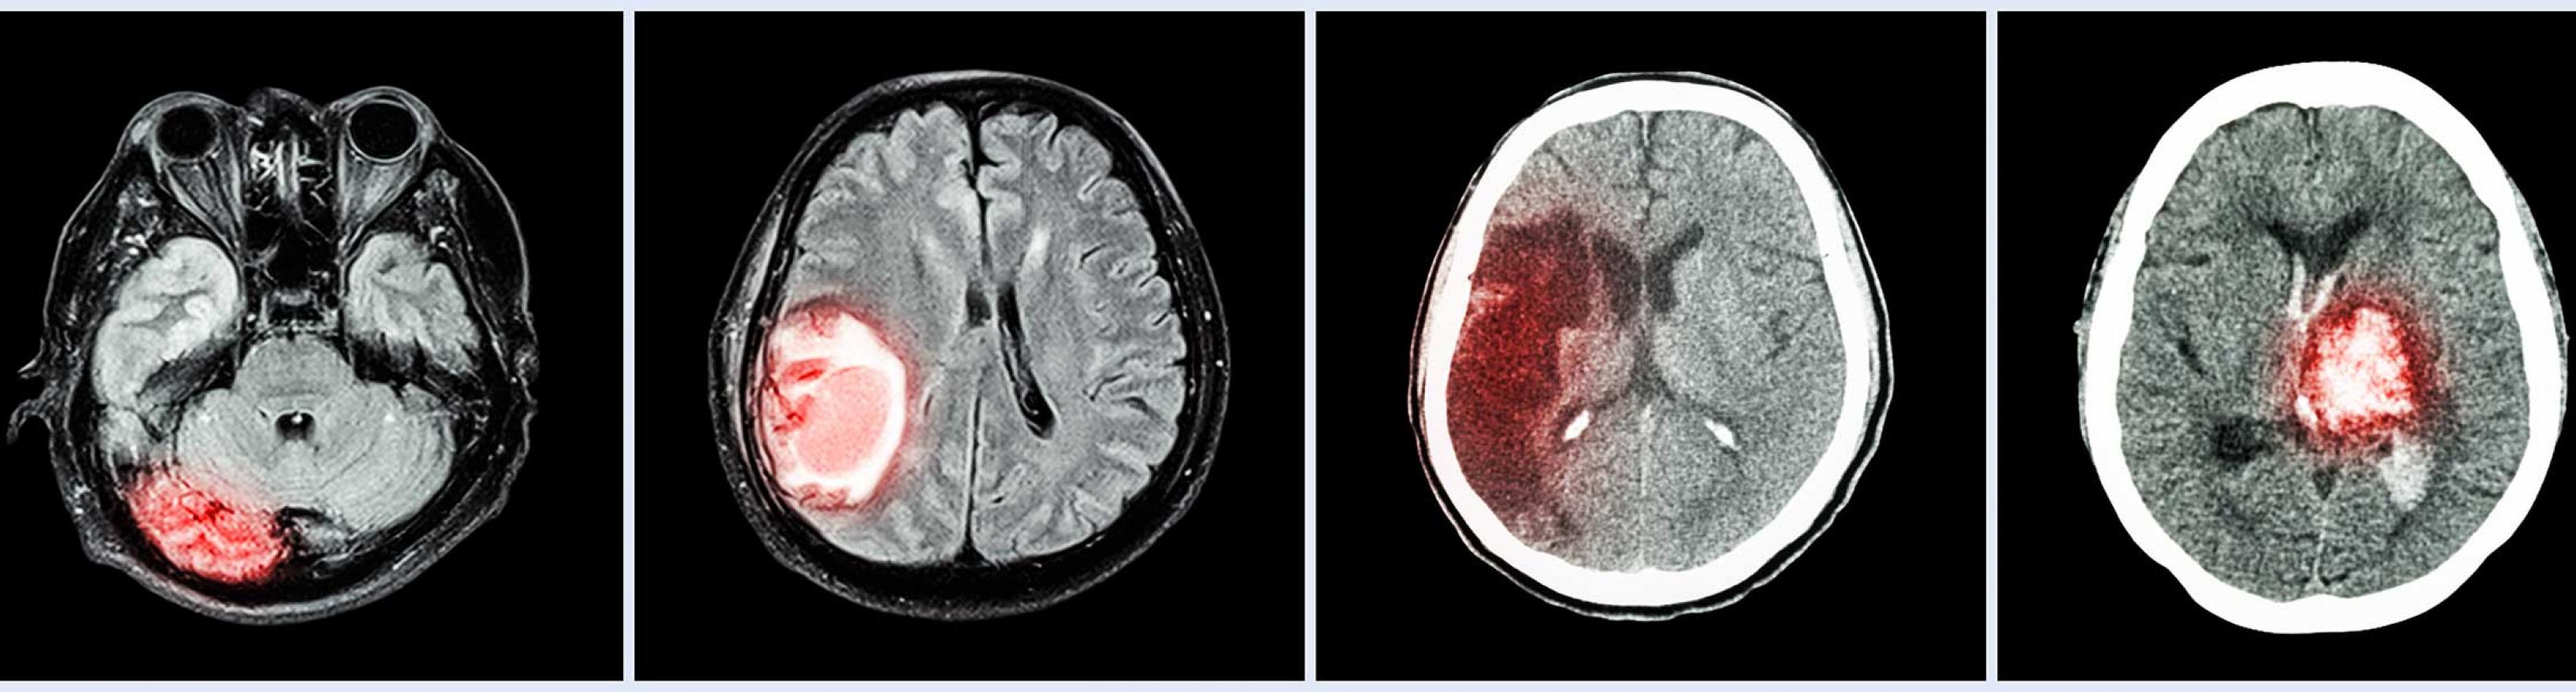 Treatments for Brain Tumors